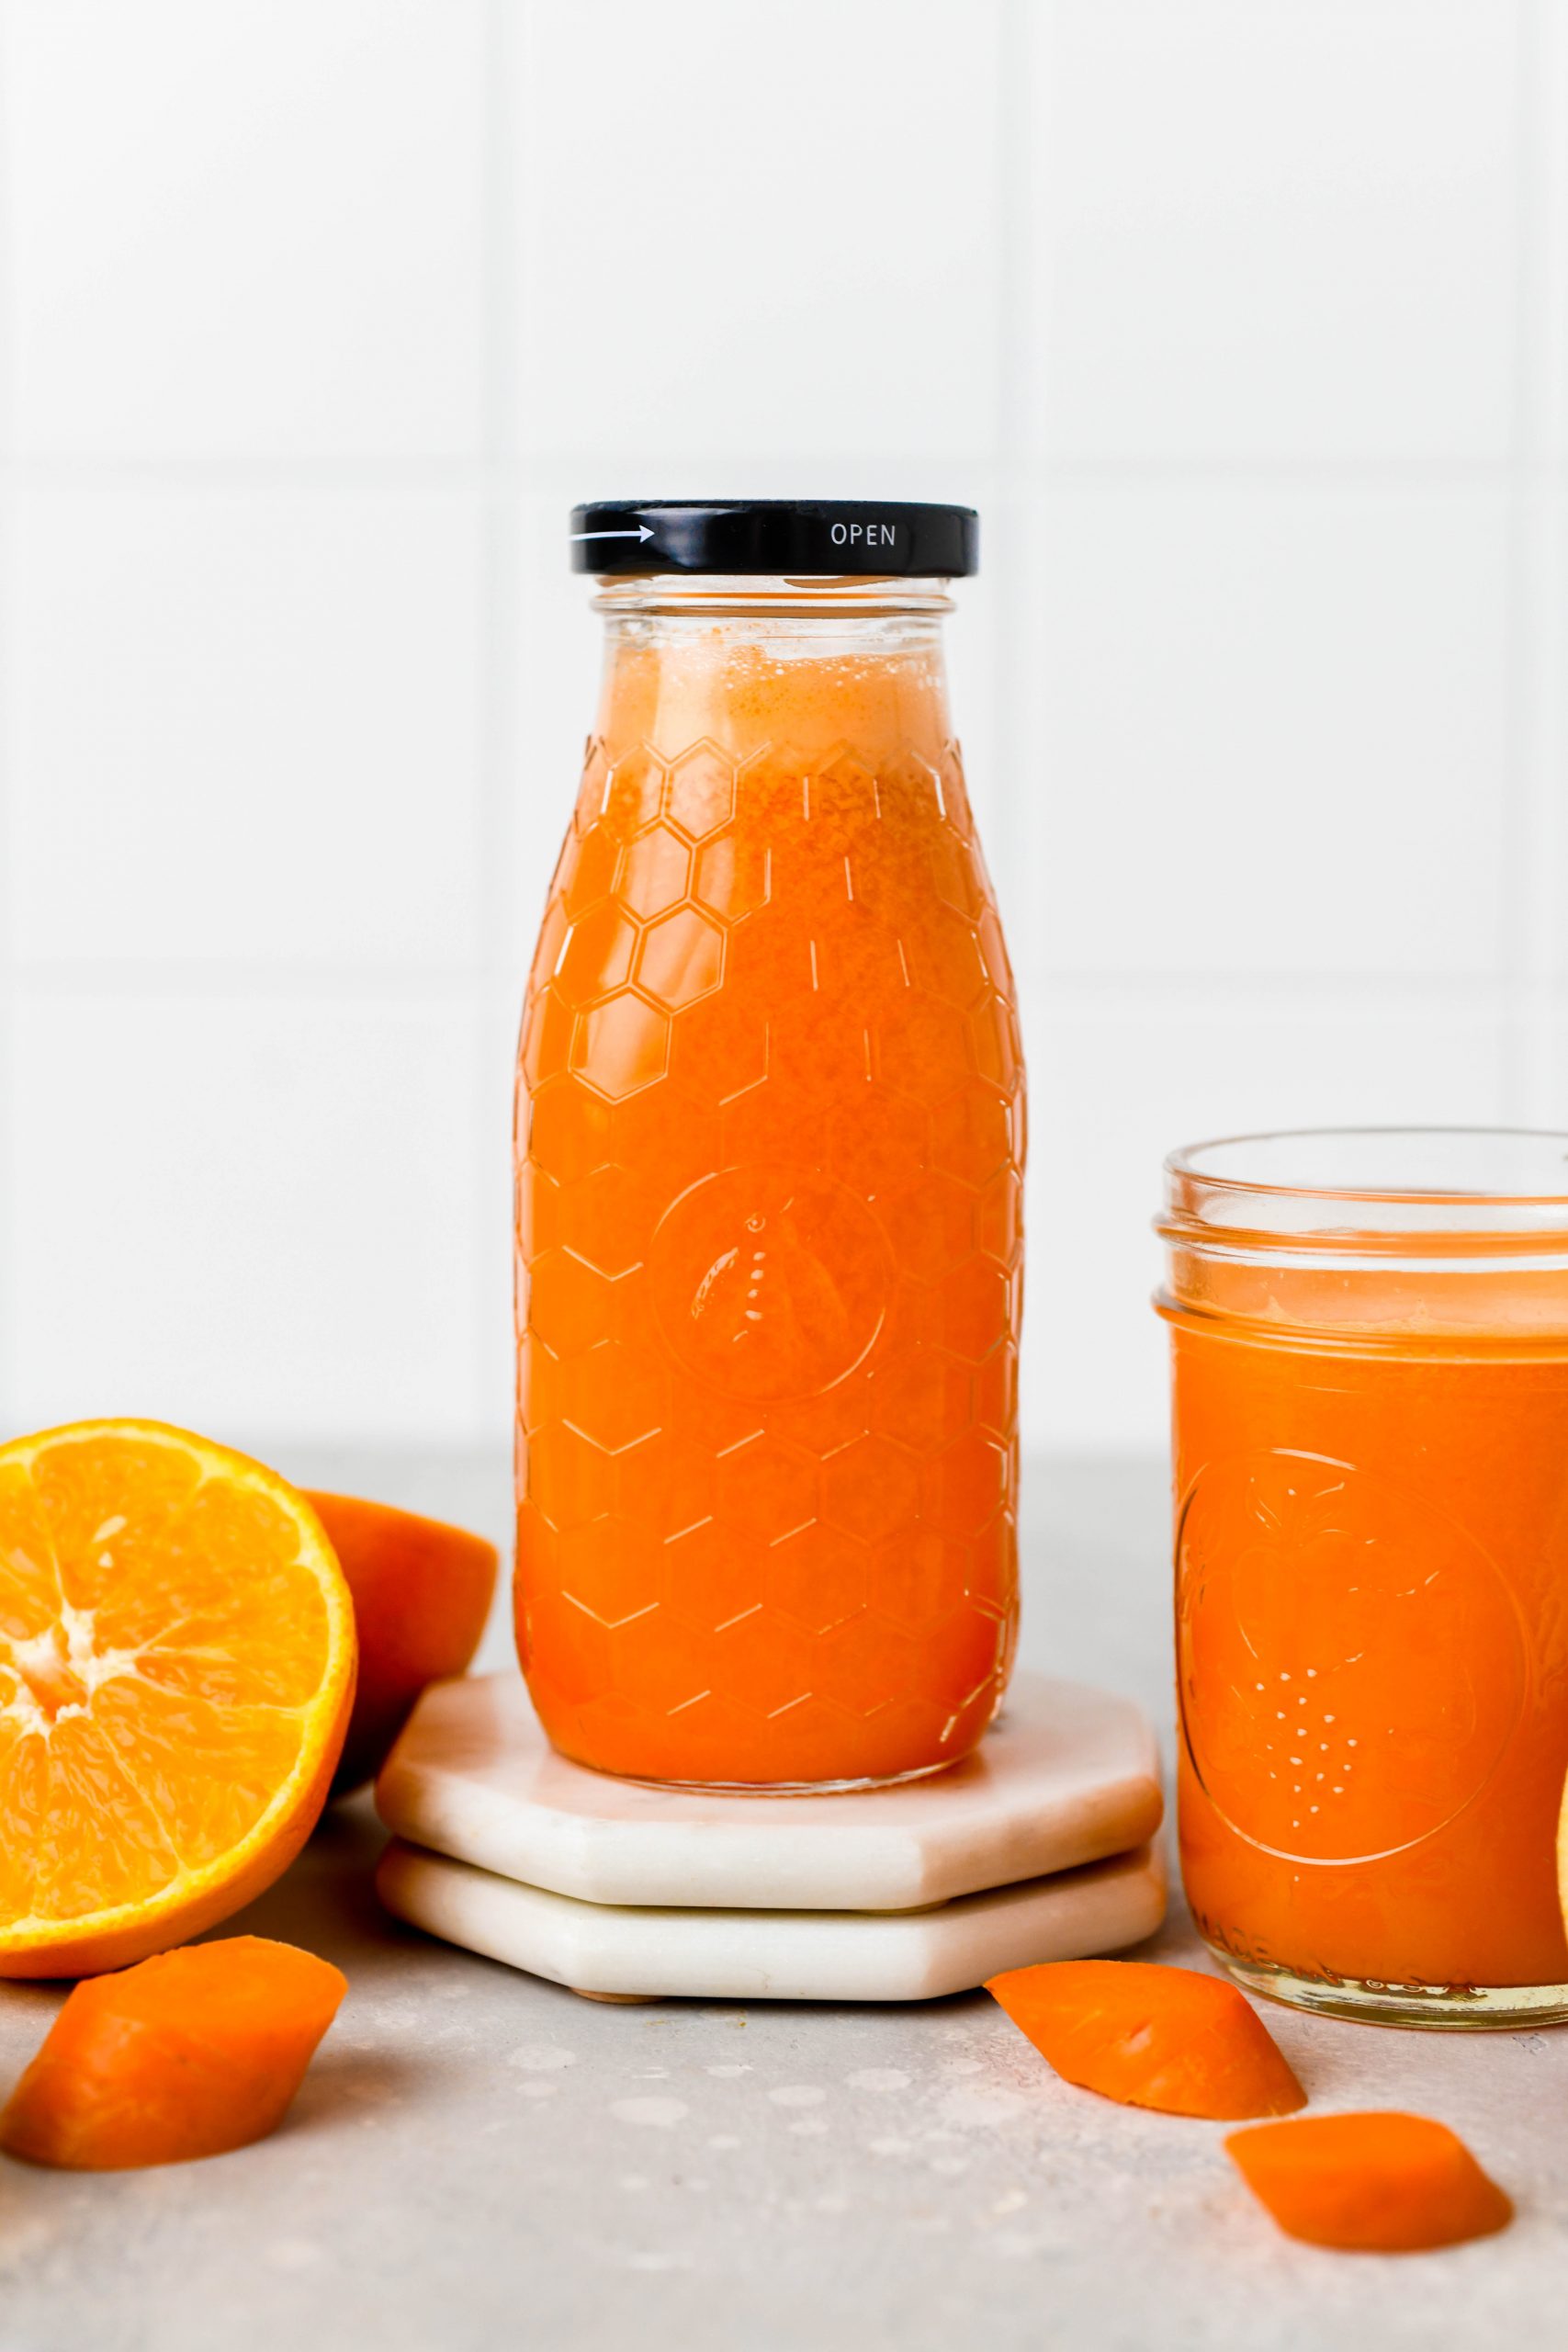 https://nyssaskitchen.com/wp-content/uploads/2021/07/Apple-Carrot-Orange-Juice-8-1-scaled.jpg